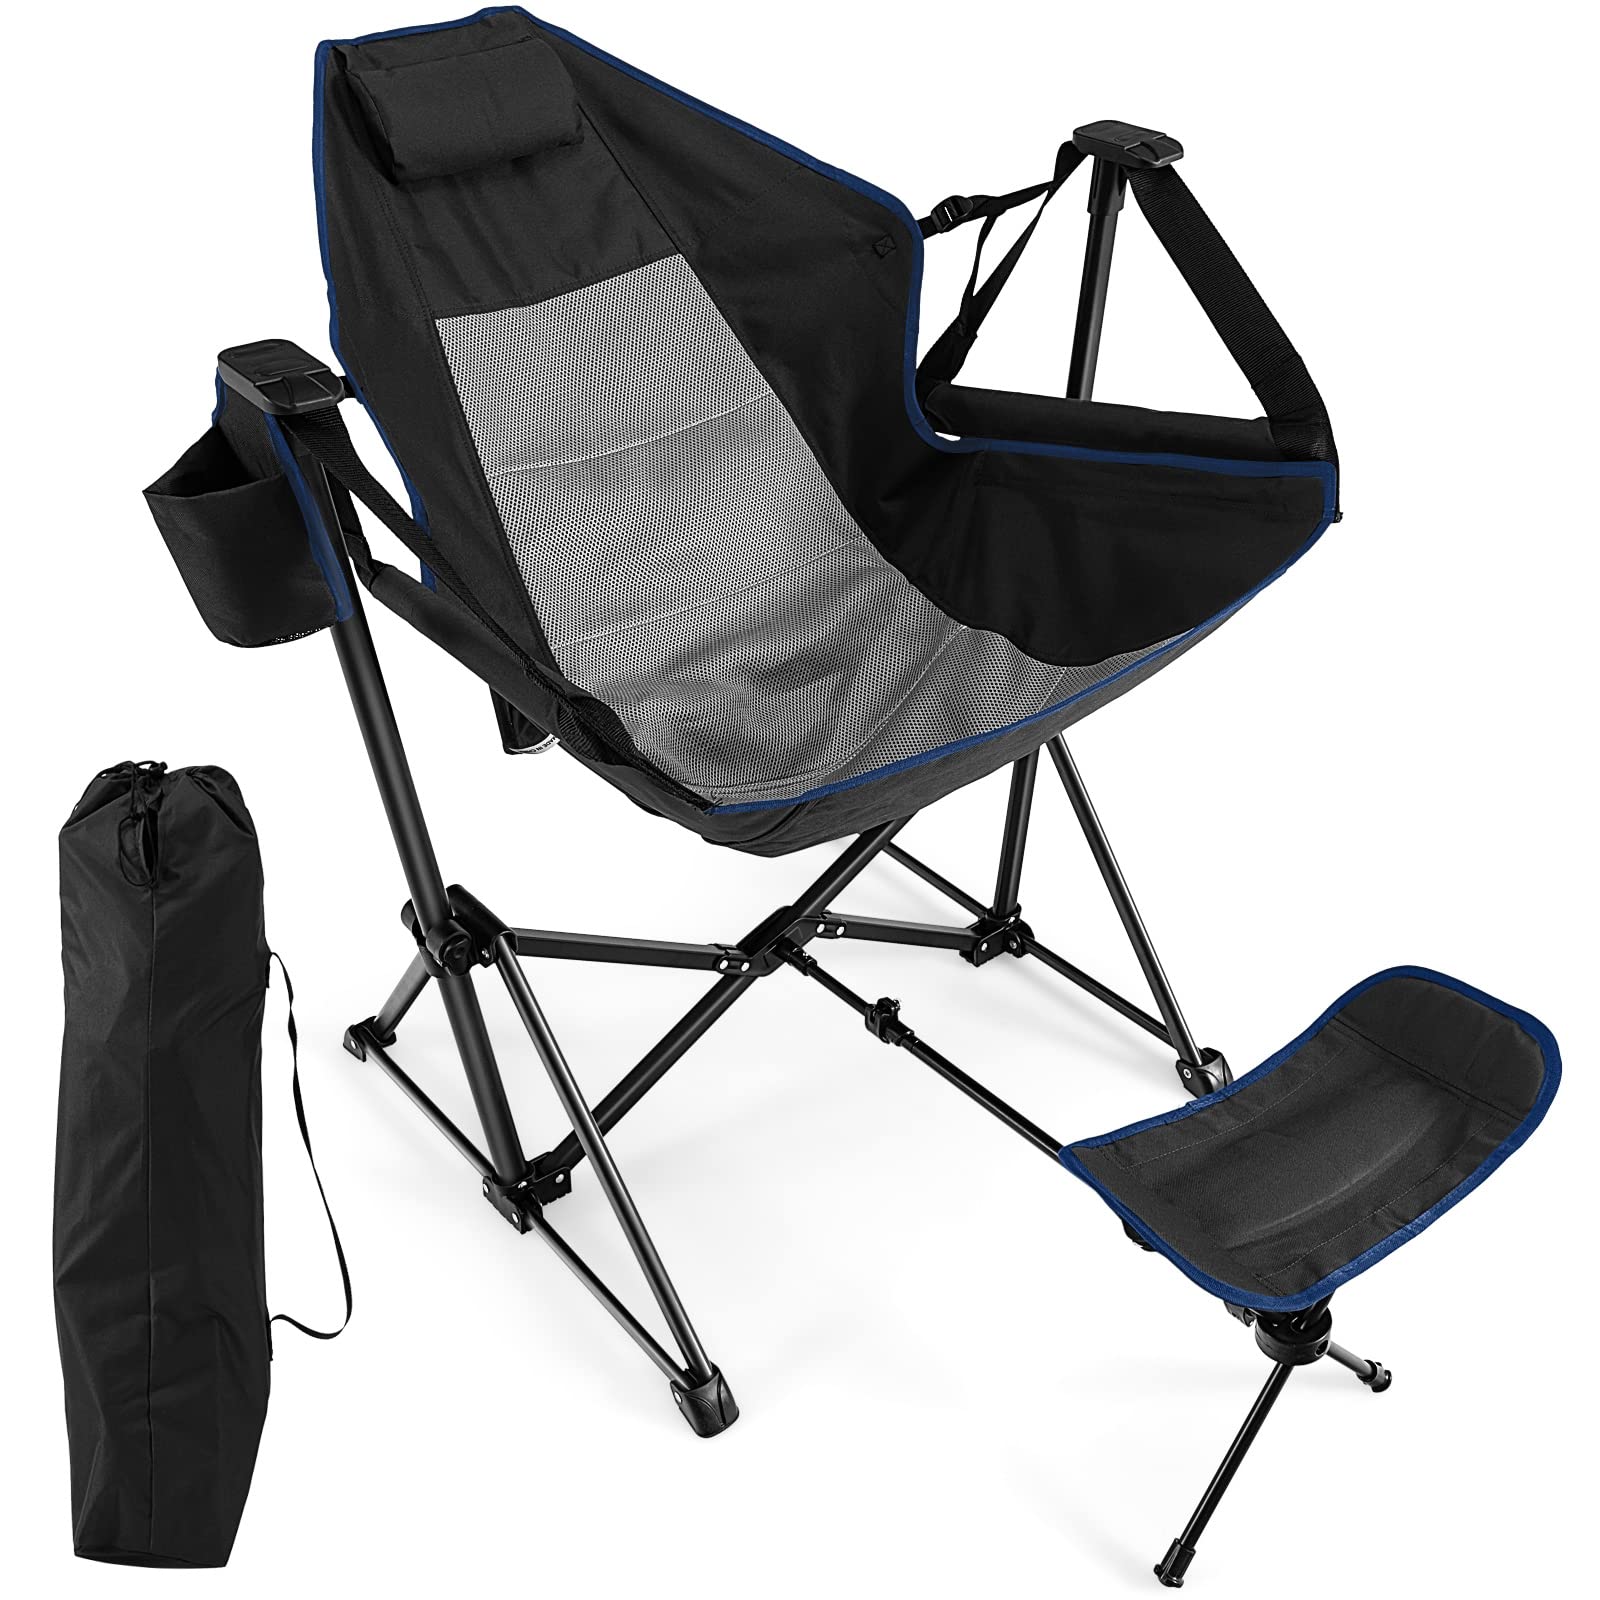 Giantex Outdoor Rocker Camping Chair - Rocking Chair